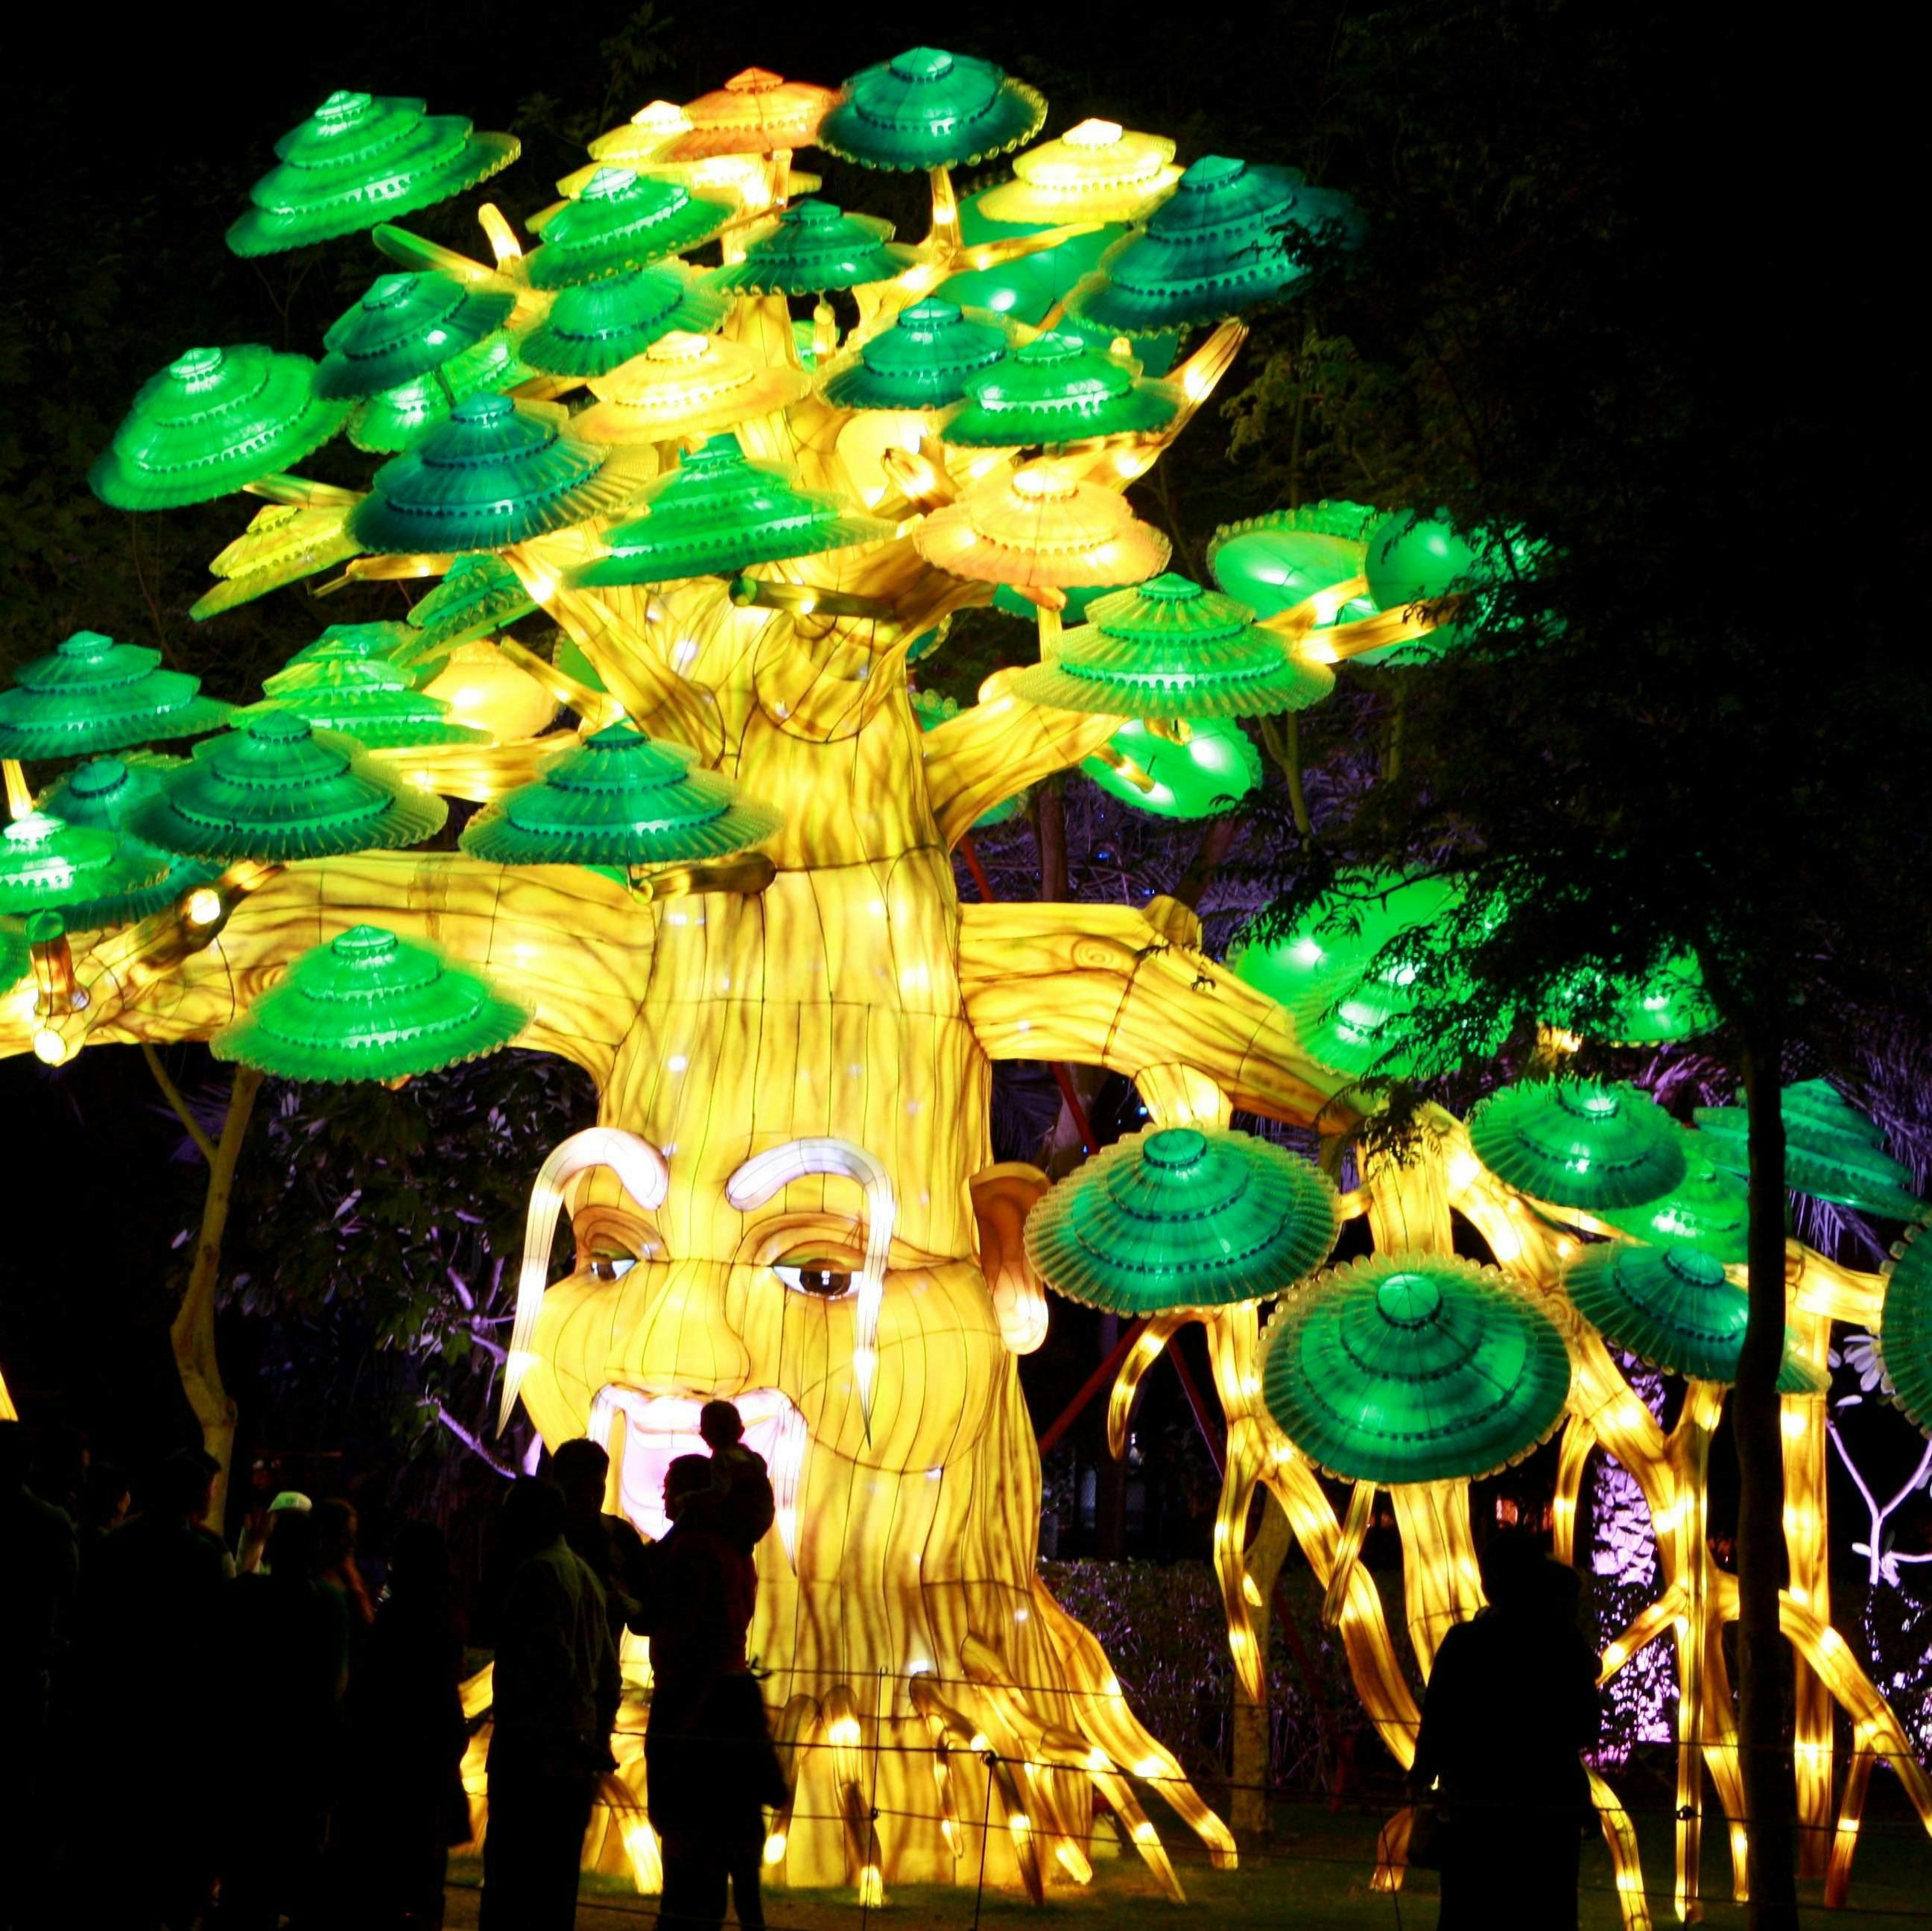 Dubai Garden glow people and tree.jpg